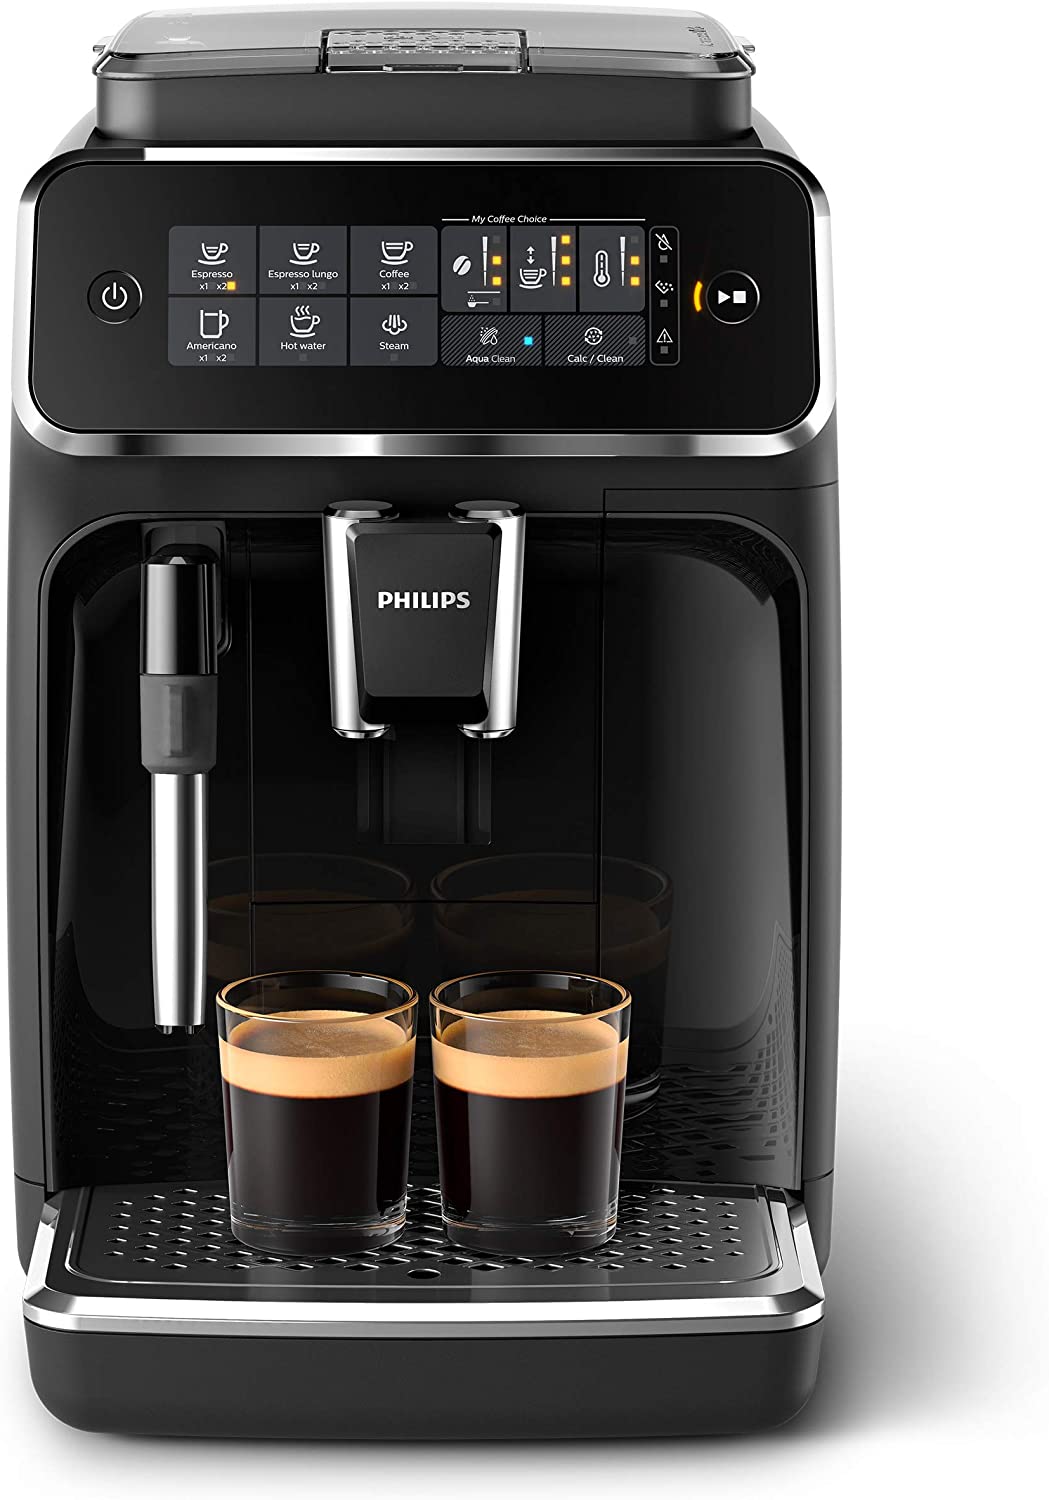 Philips UI Coffee Machine